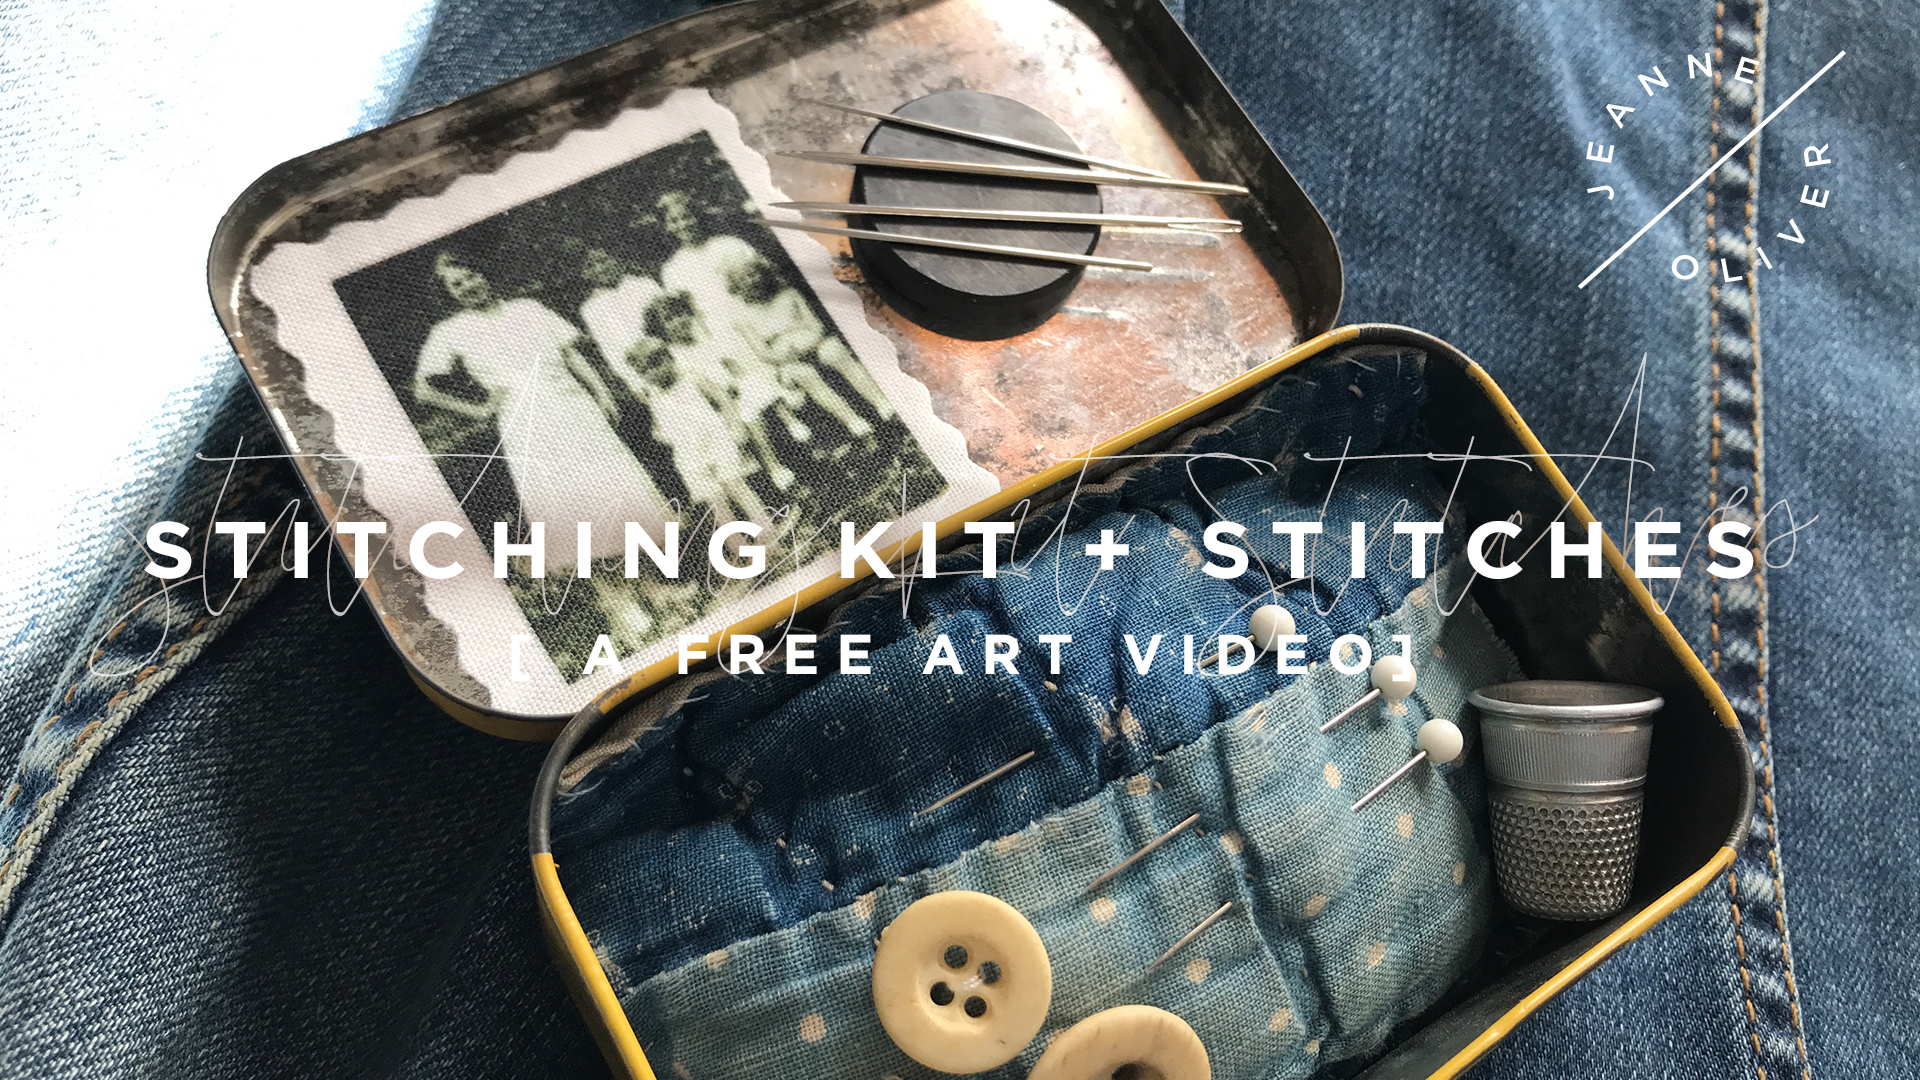 A Brand New Free Art Lesson | Stitching Kit + Stitches with Charlotte Lyons